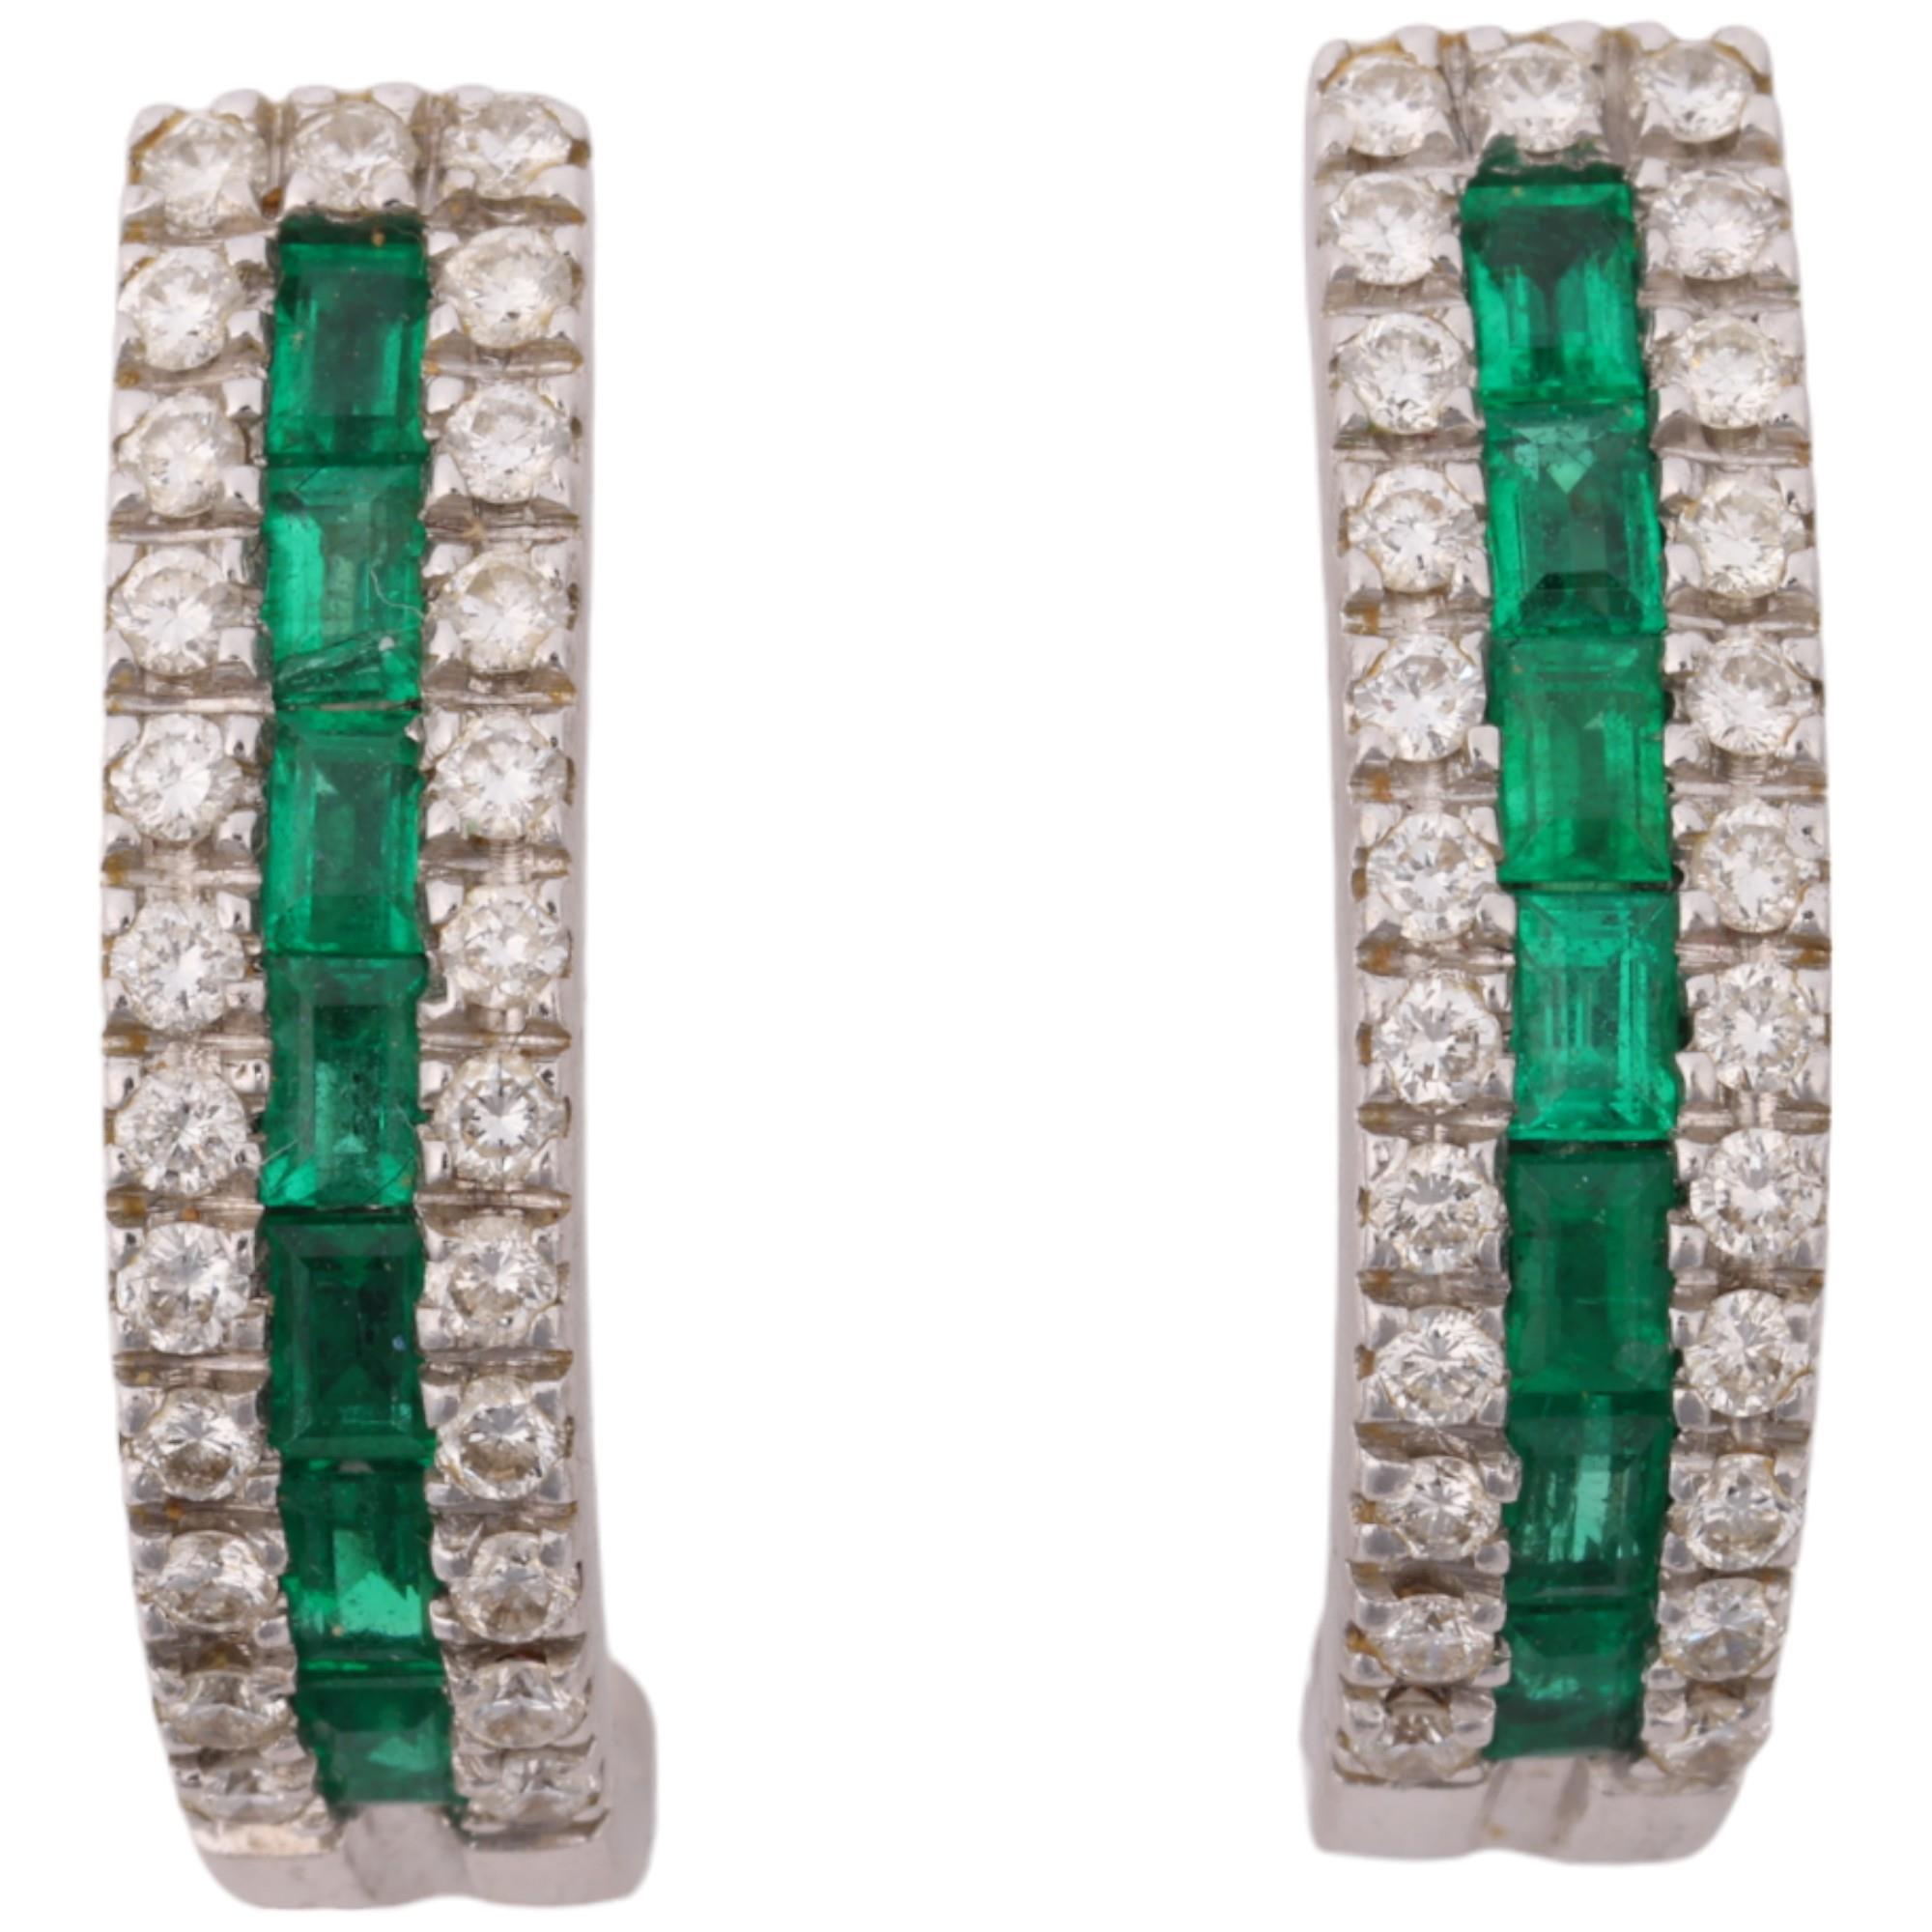 MASSIMO RAITERI - a pair of 18ct white gold emerald and diamond half hoop earrings, with stud